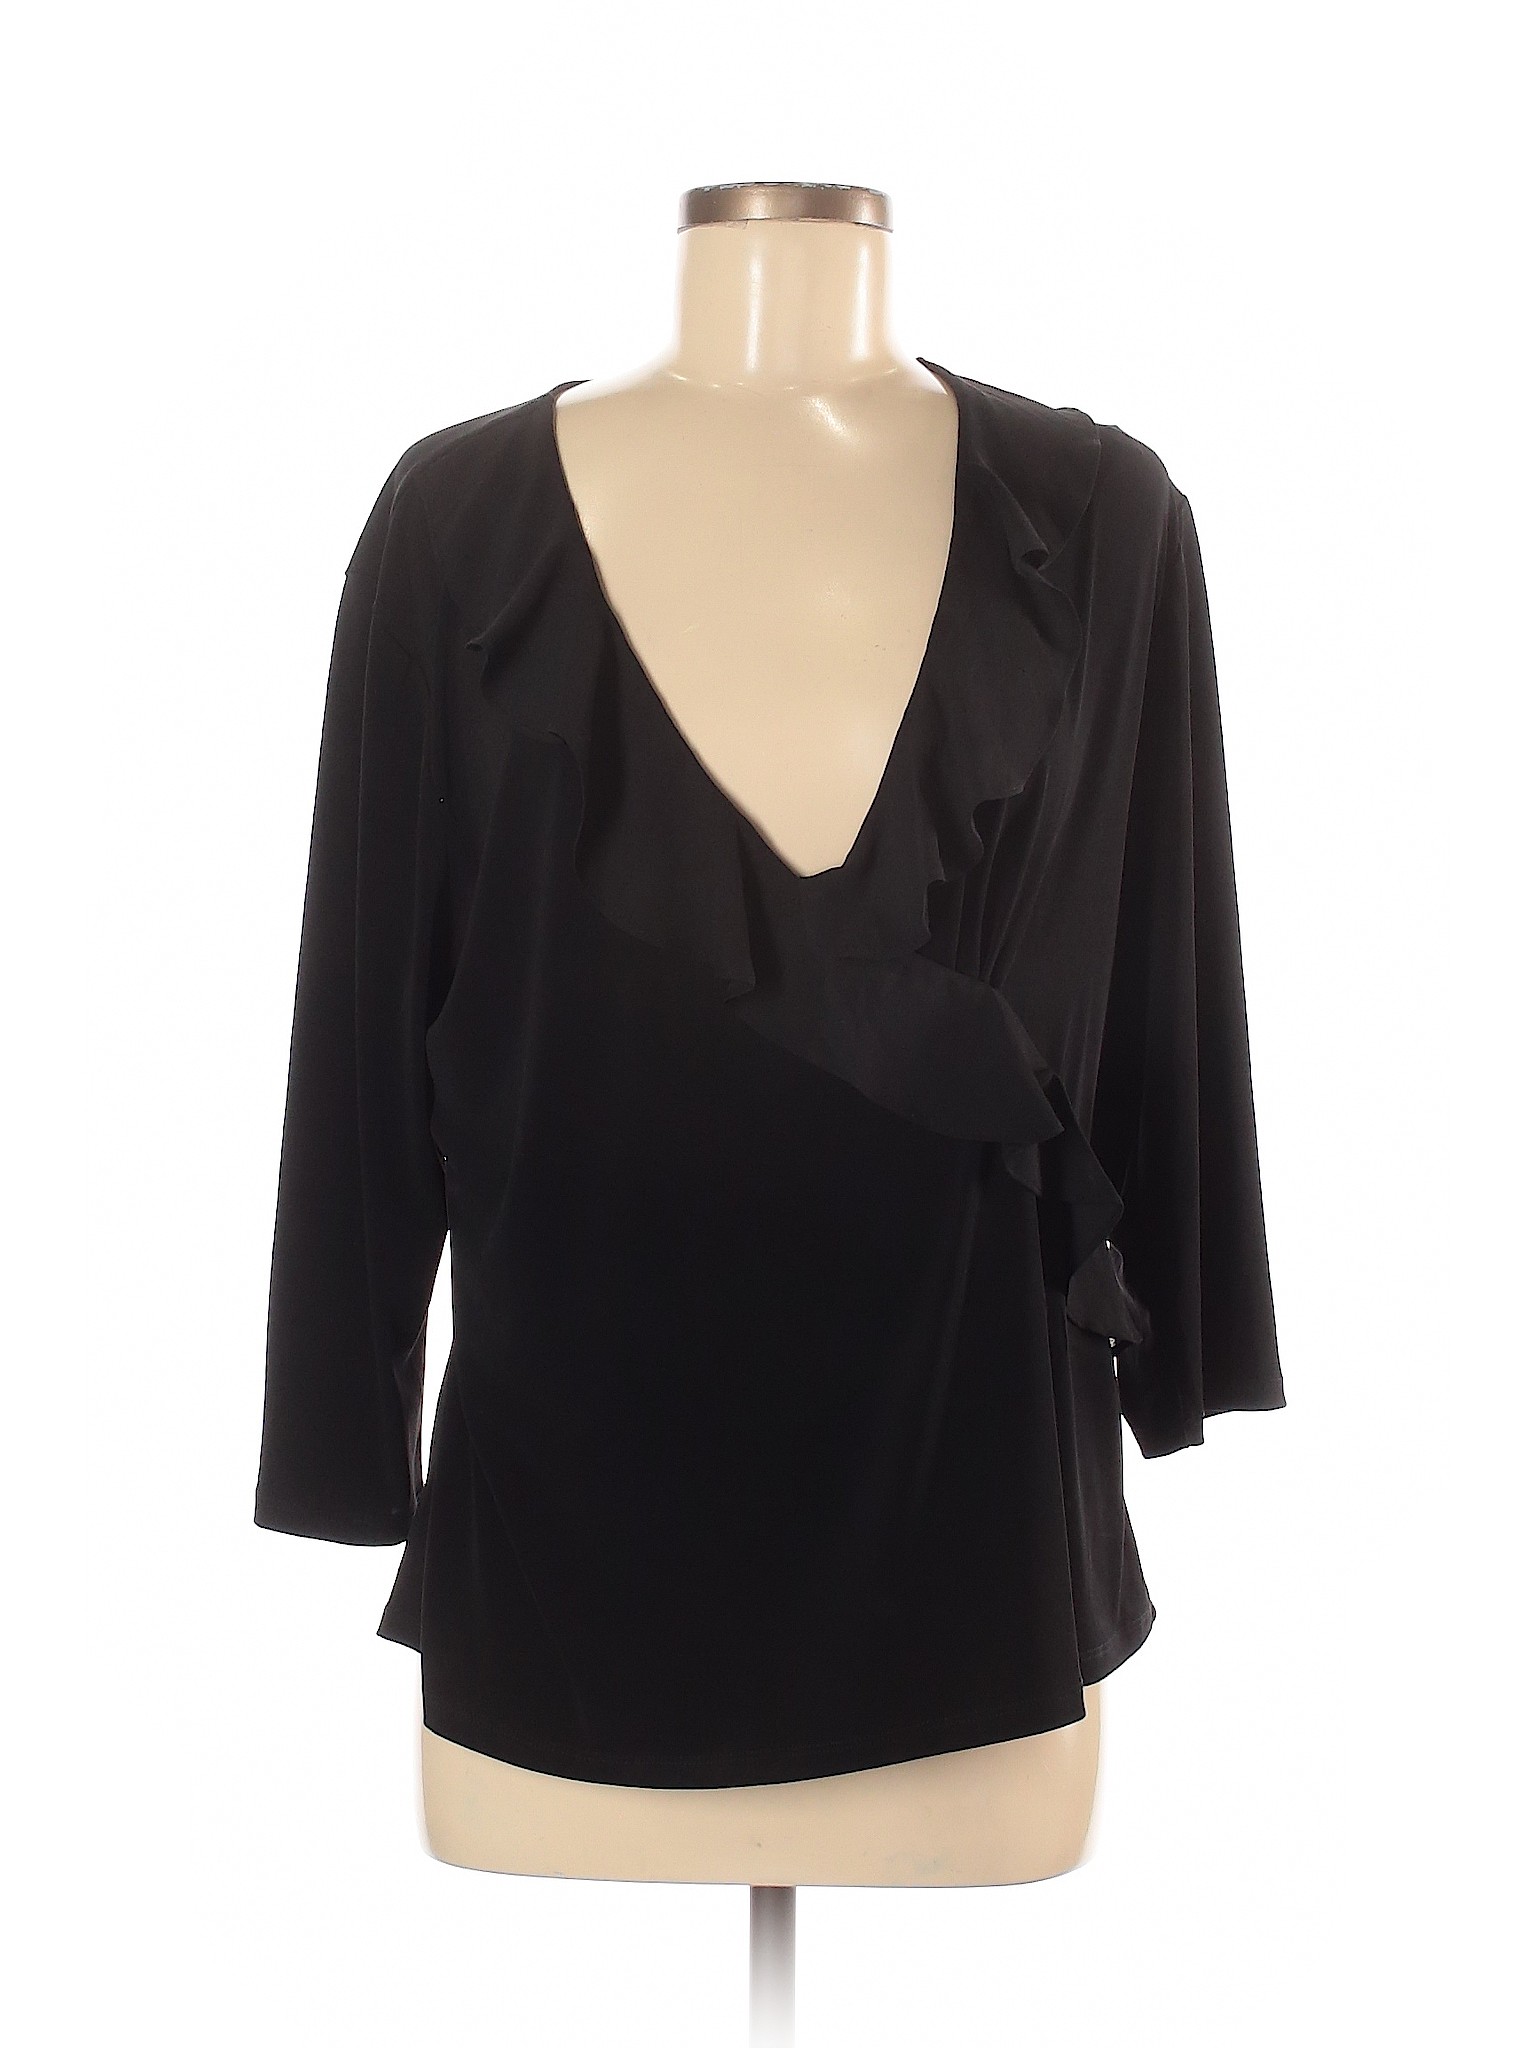 Karl Lagerfeld Paris Women Black 3/4 Sleeve Top L | eBay